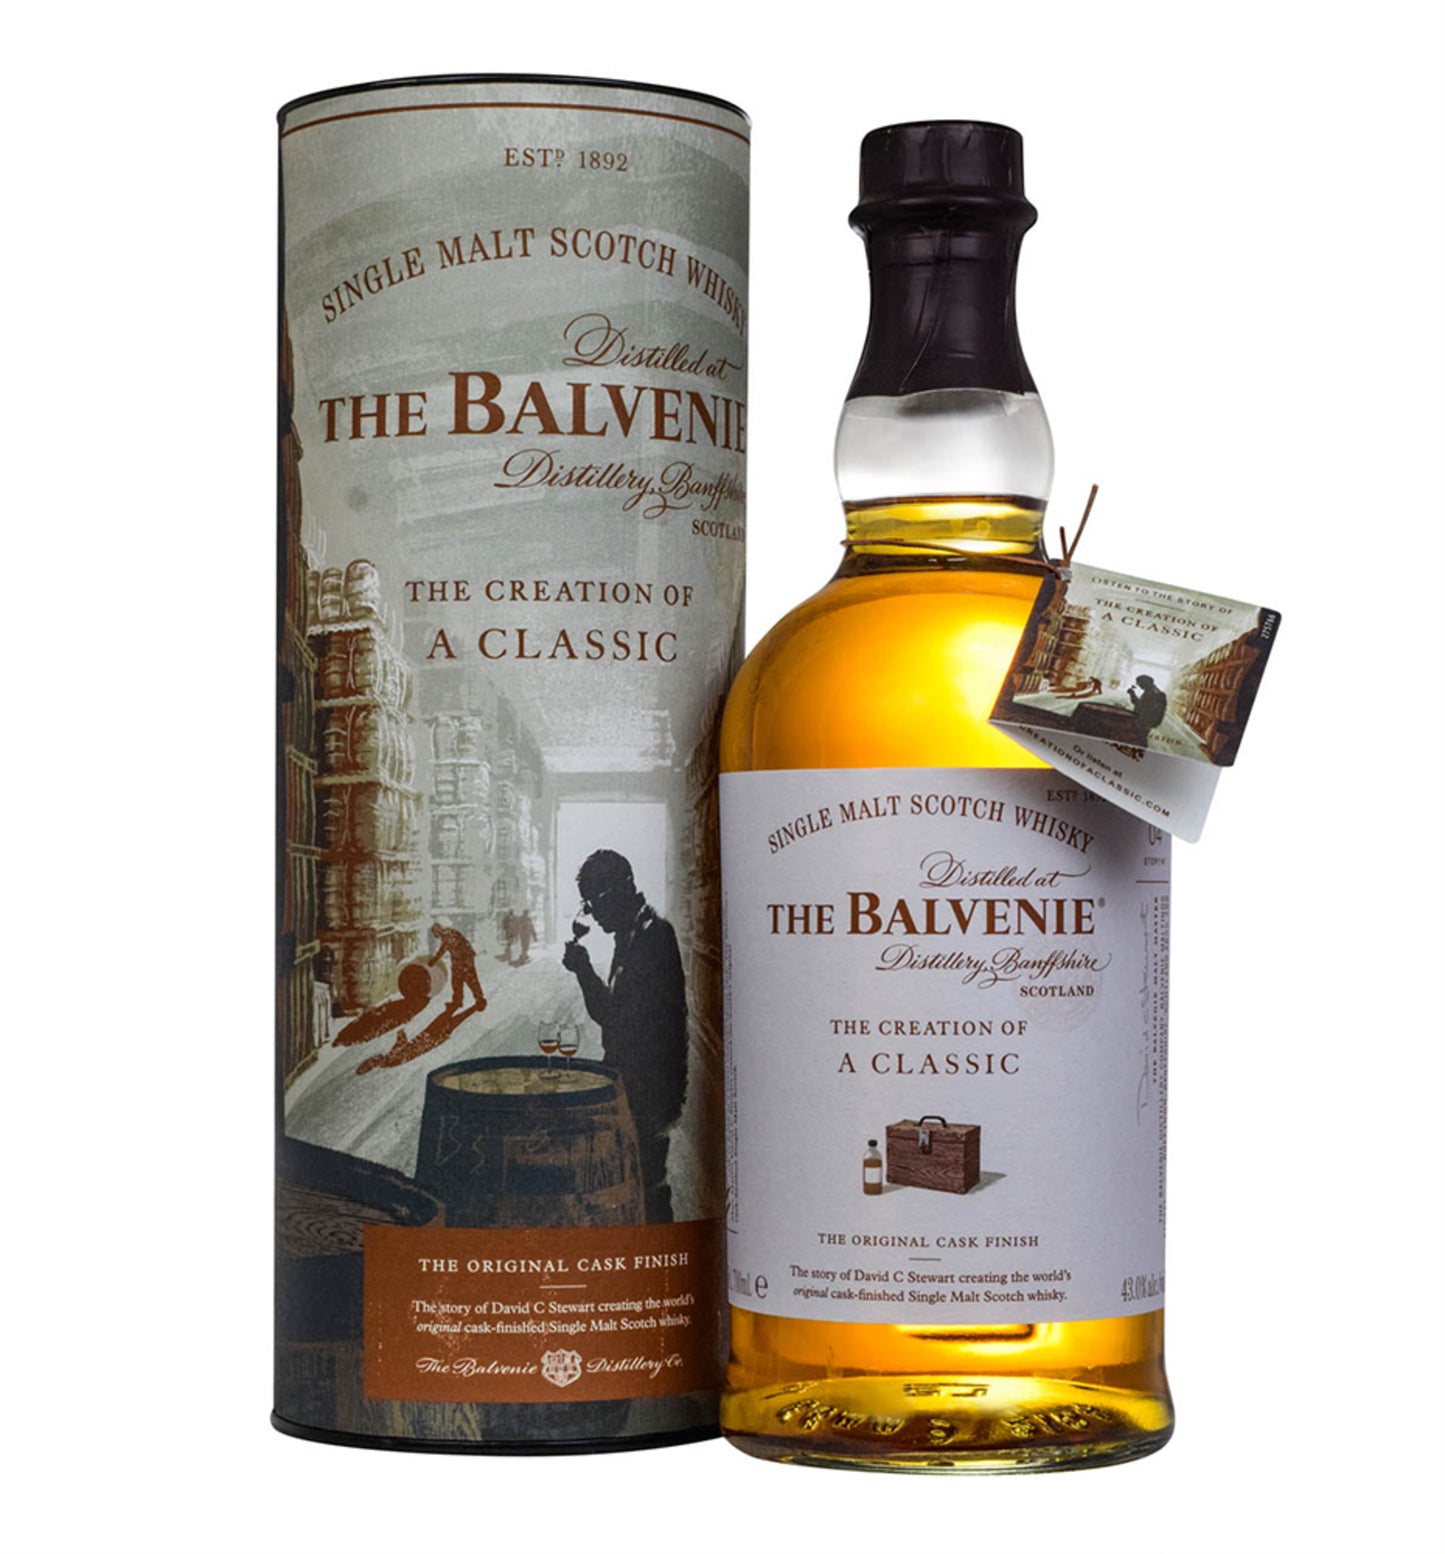 THE BALVENIE The Creation Of A Classic Single Malt Scotch Whisky